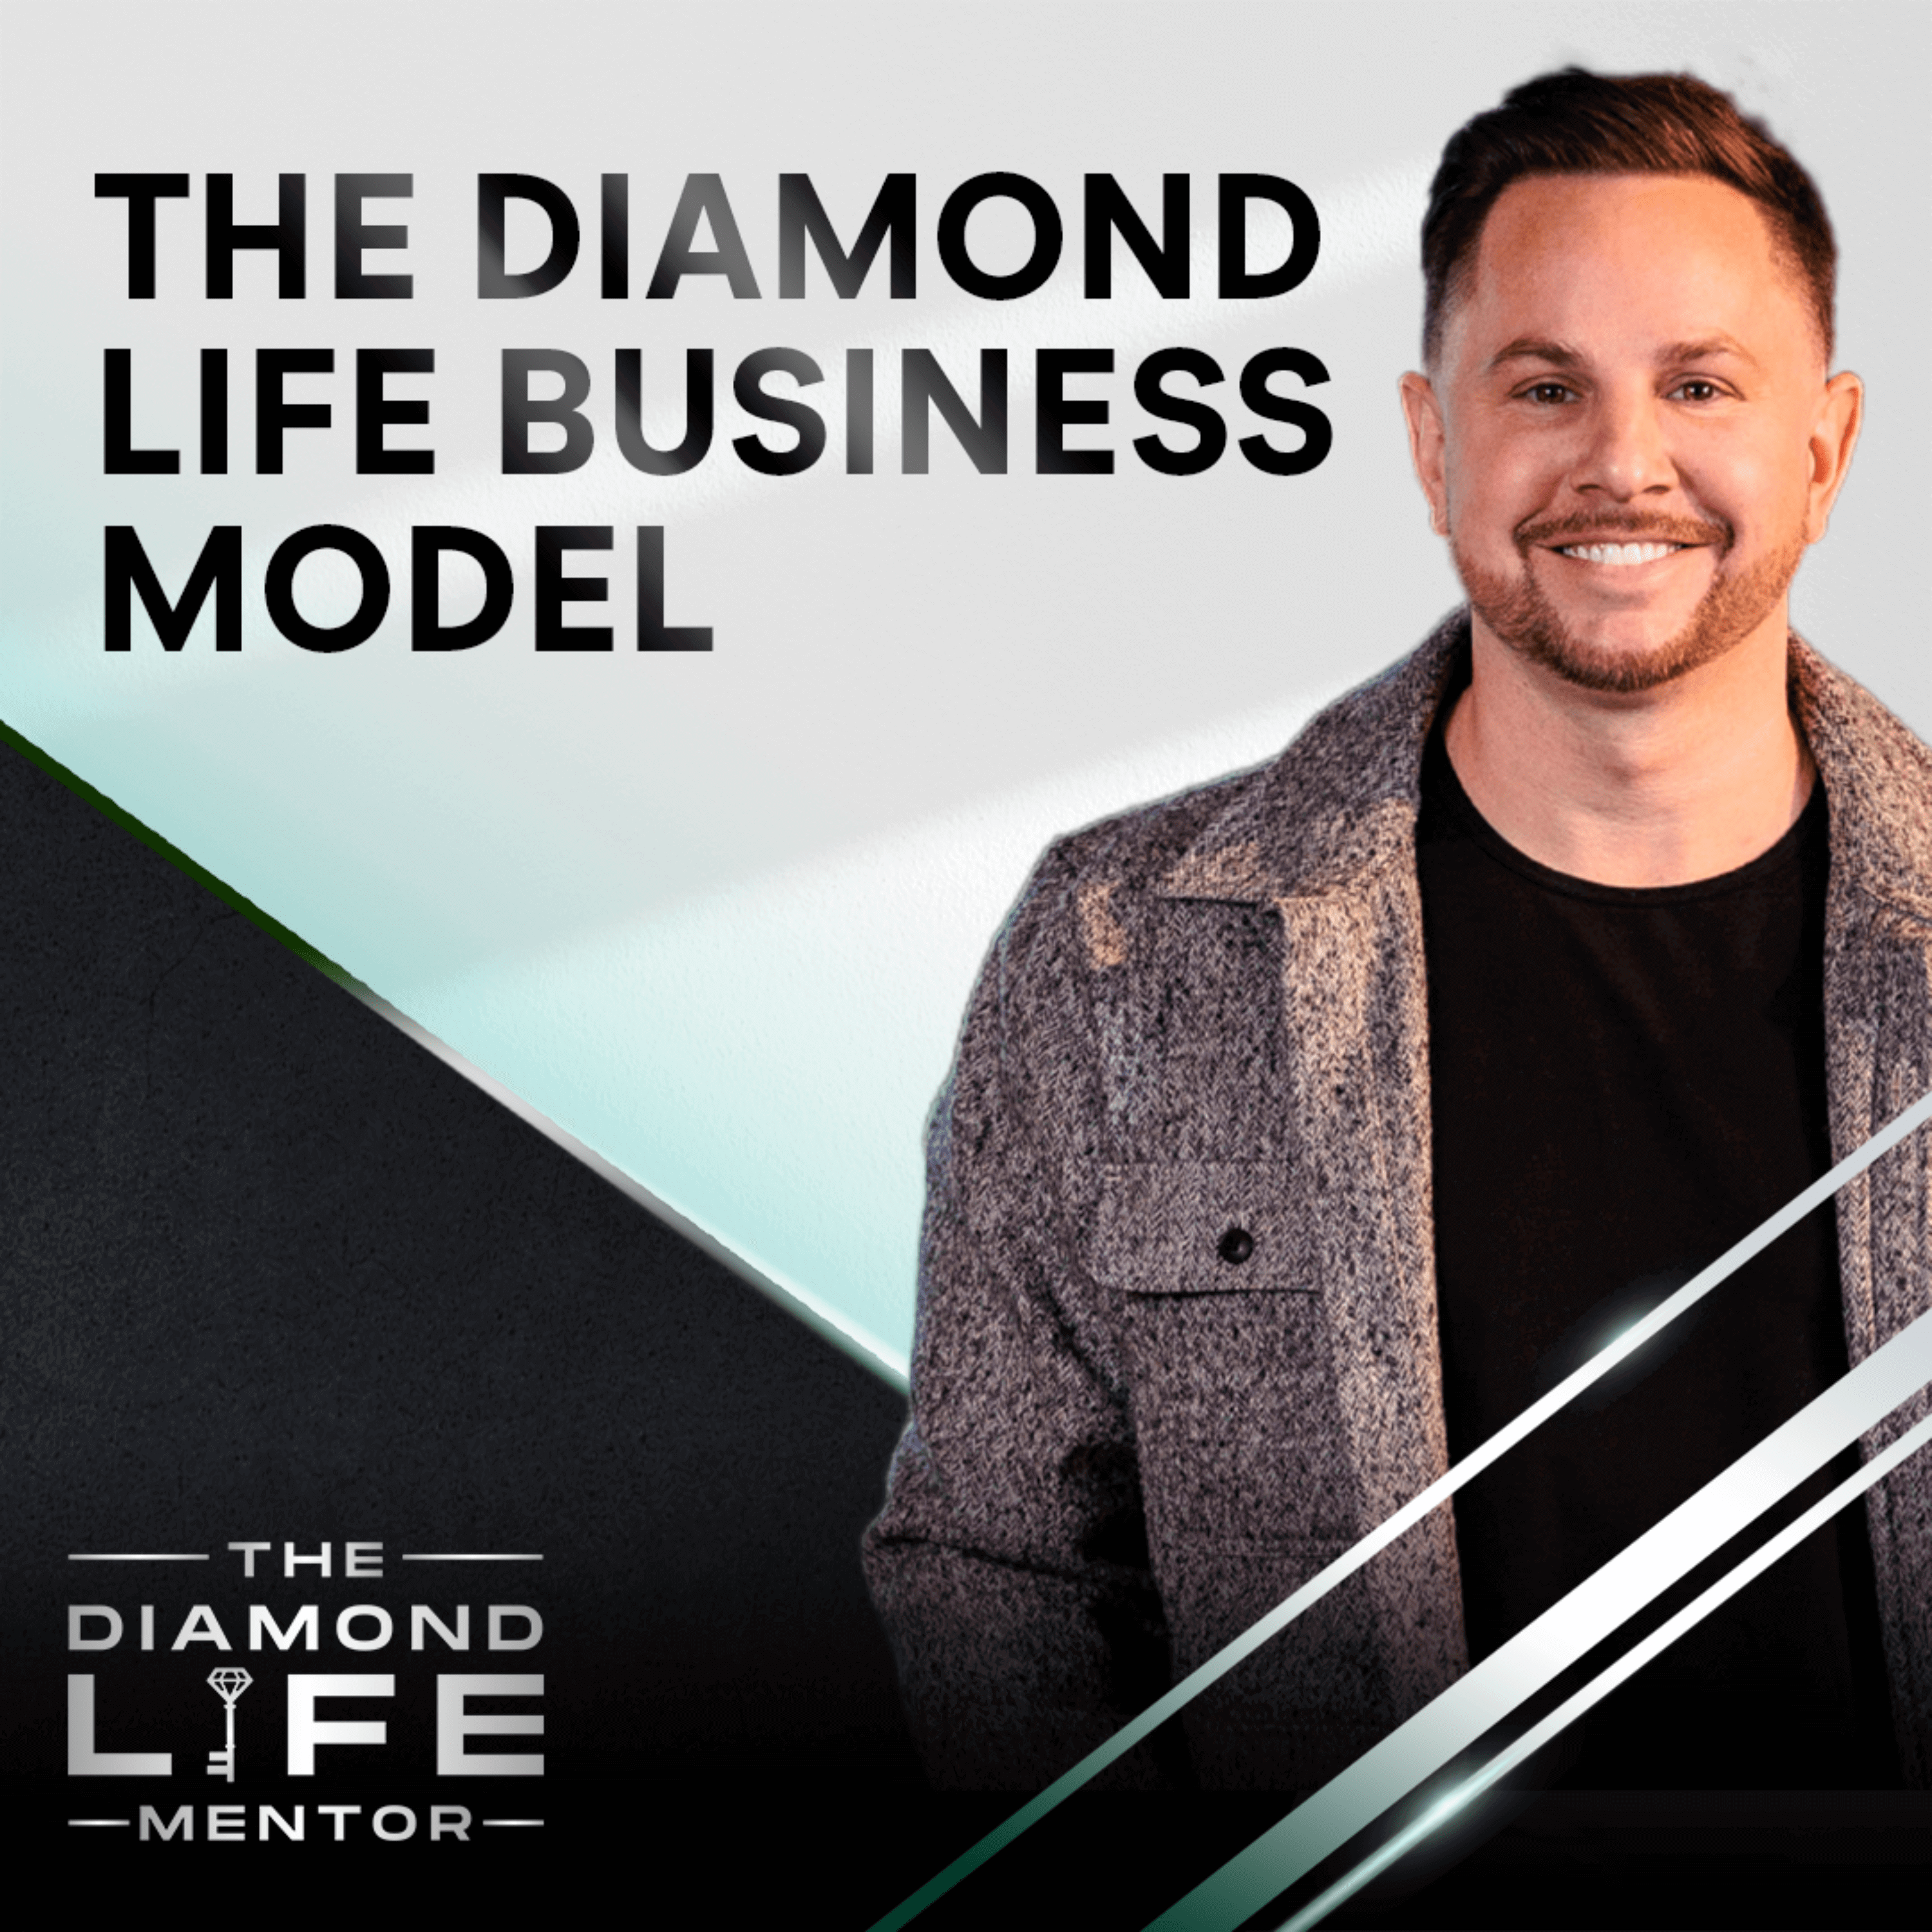 The Diamond Life Business Model